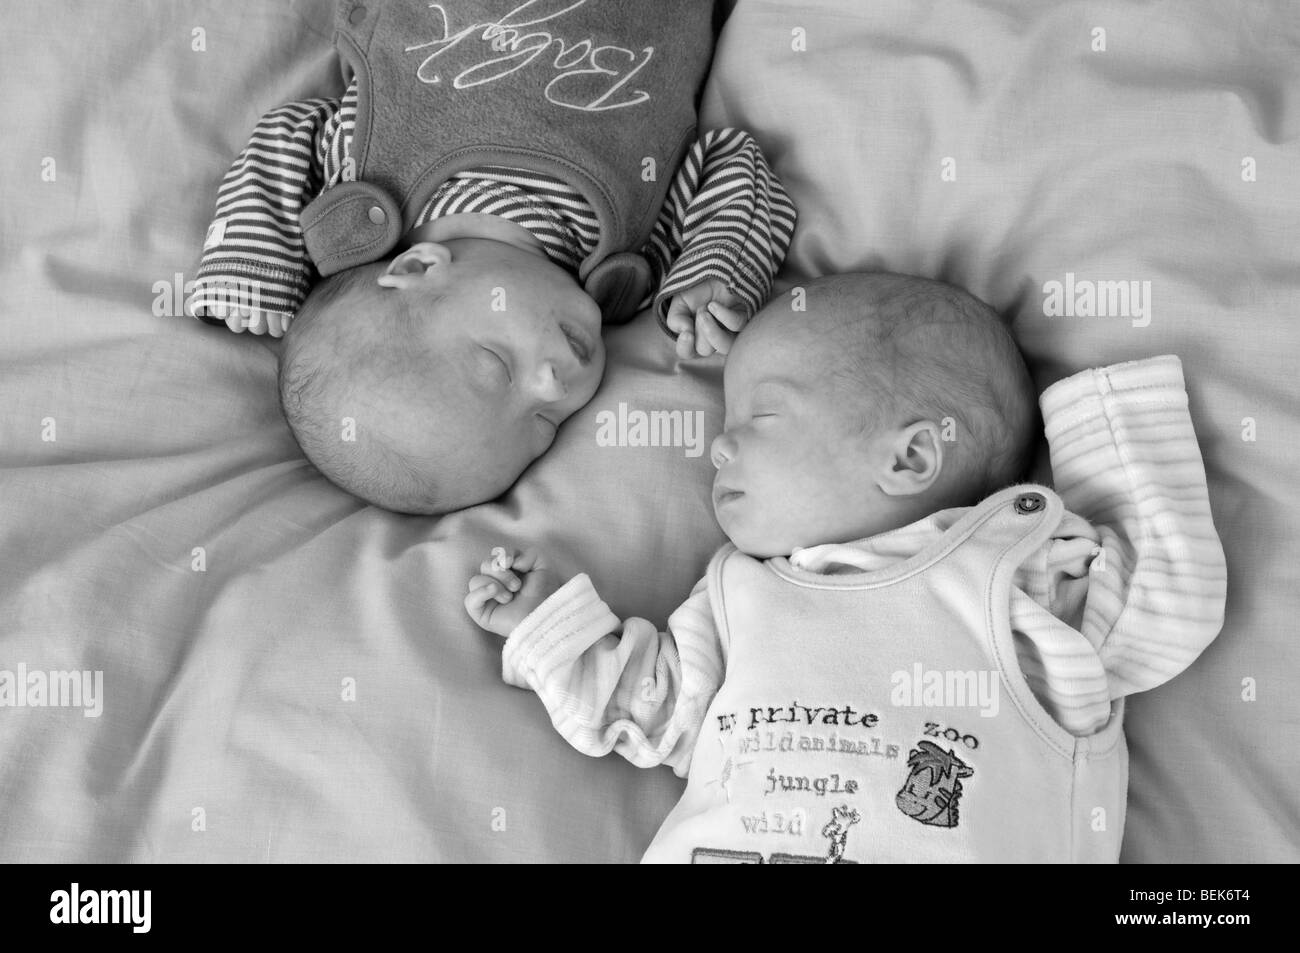 Premature babies, identical twin boys sleeping Stock Photo